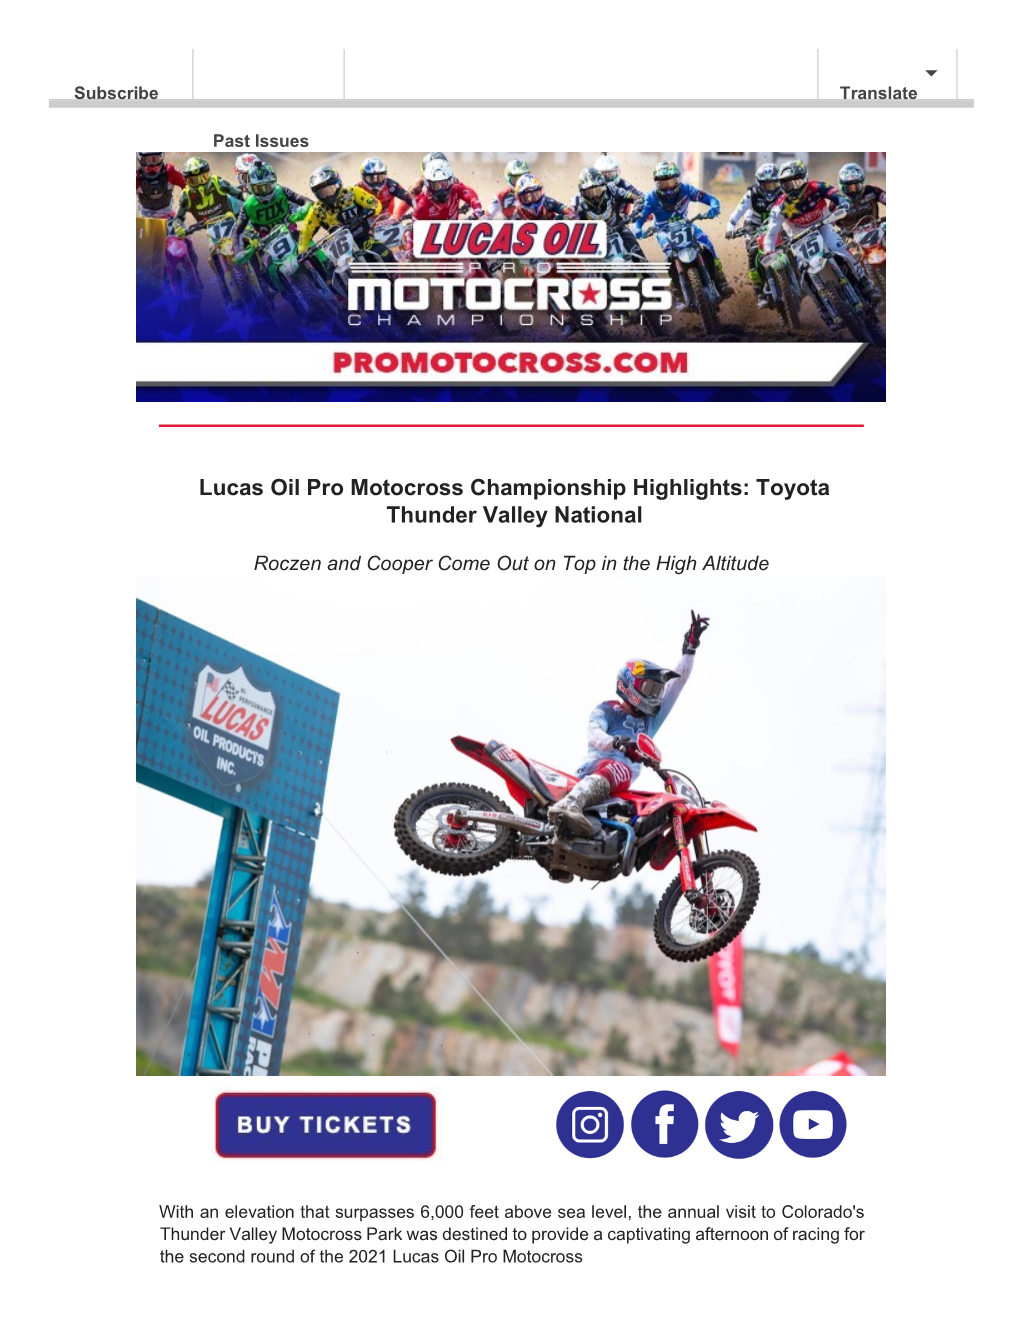 Lucas Oil Pro Motocross Championship Highlights: Toyota Thunder Valley National